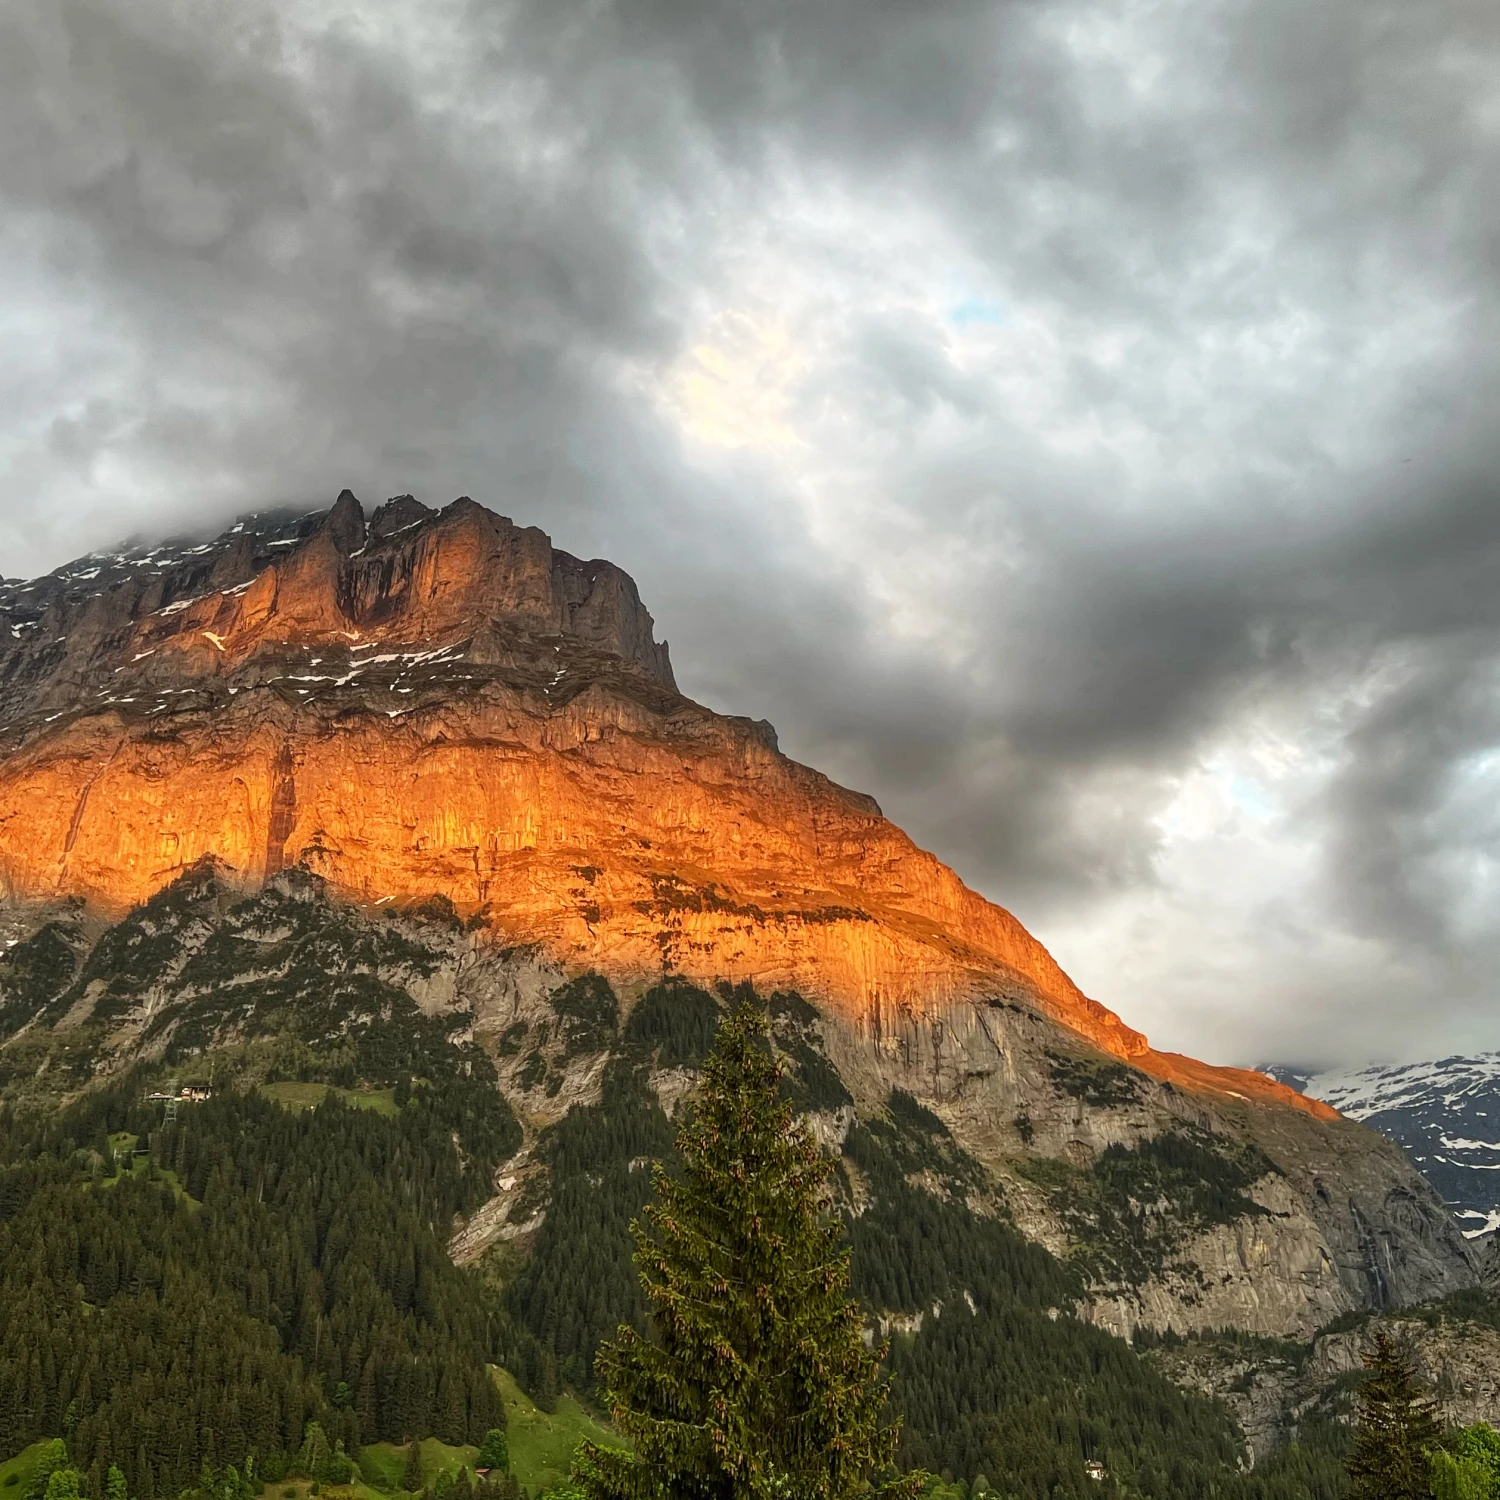 A beautiful view of a burning mountain